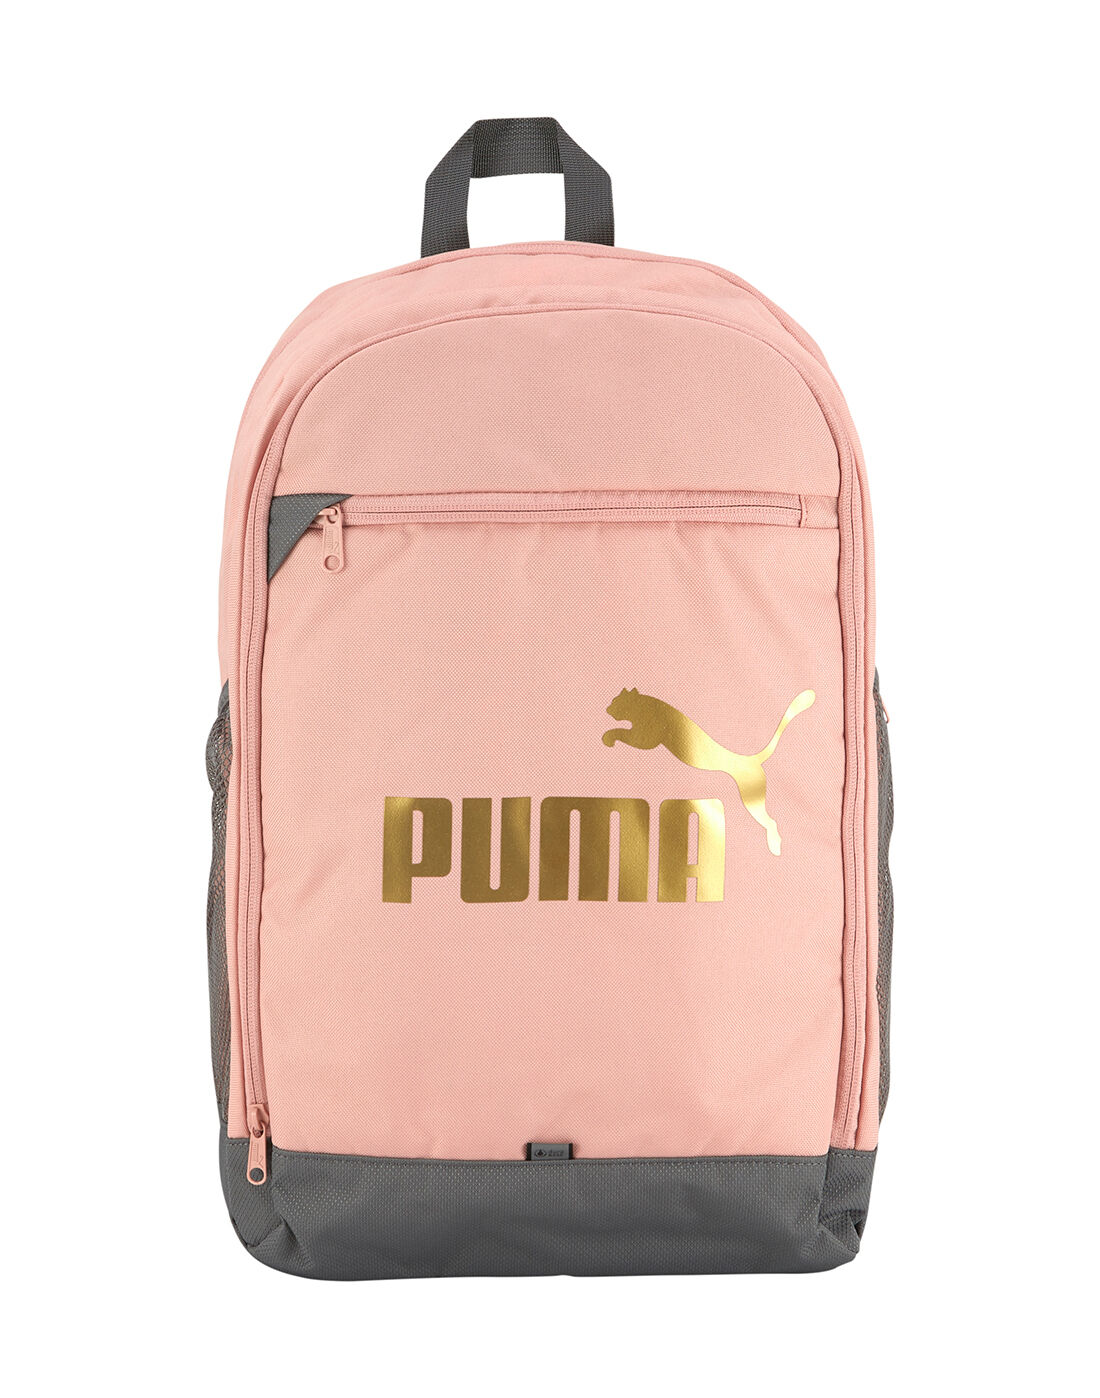 Pink Puma School Bag | Life Style Sports